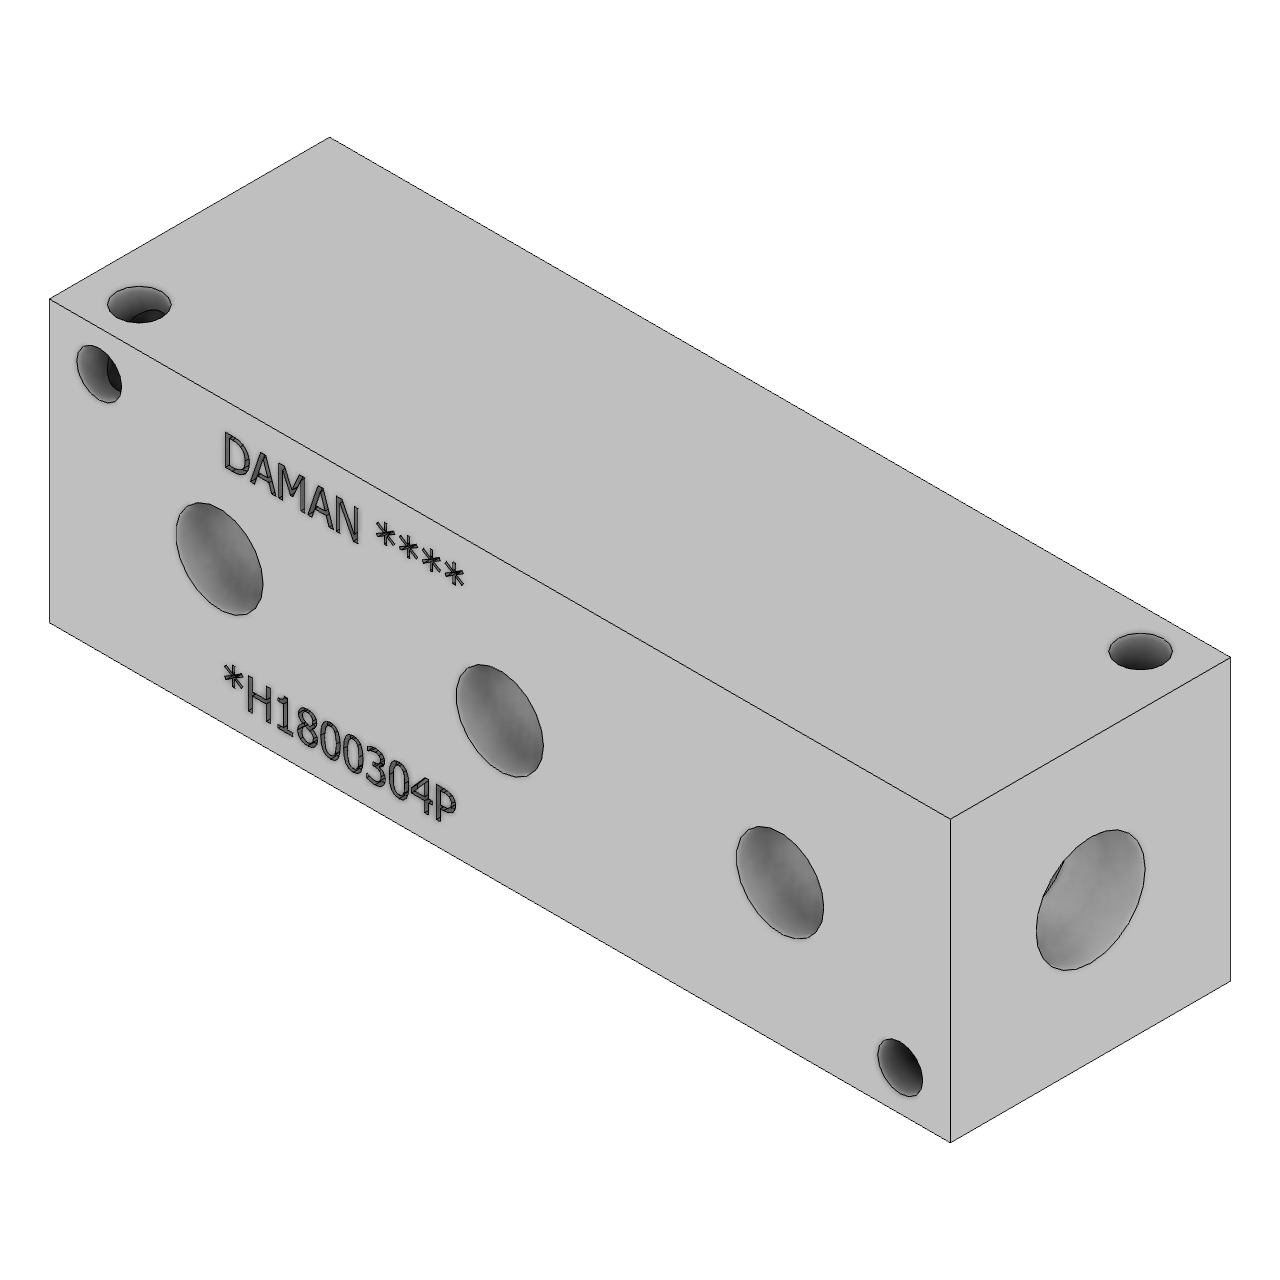 SH1800304P - Header and Junction Blocks